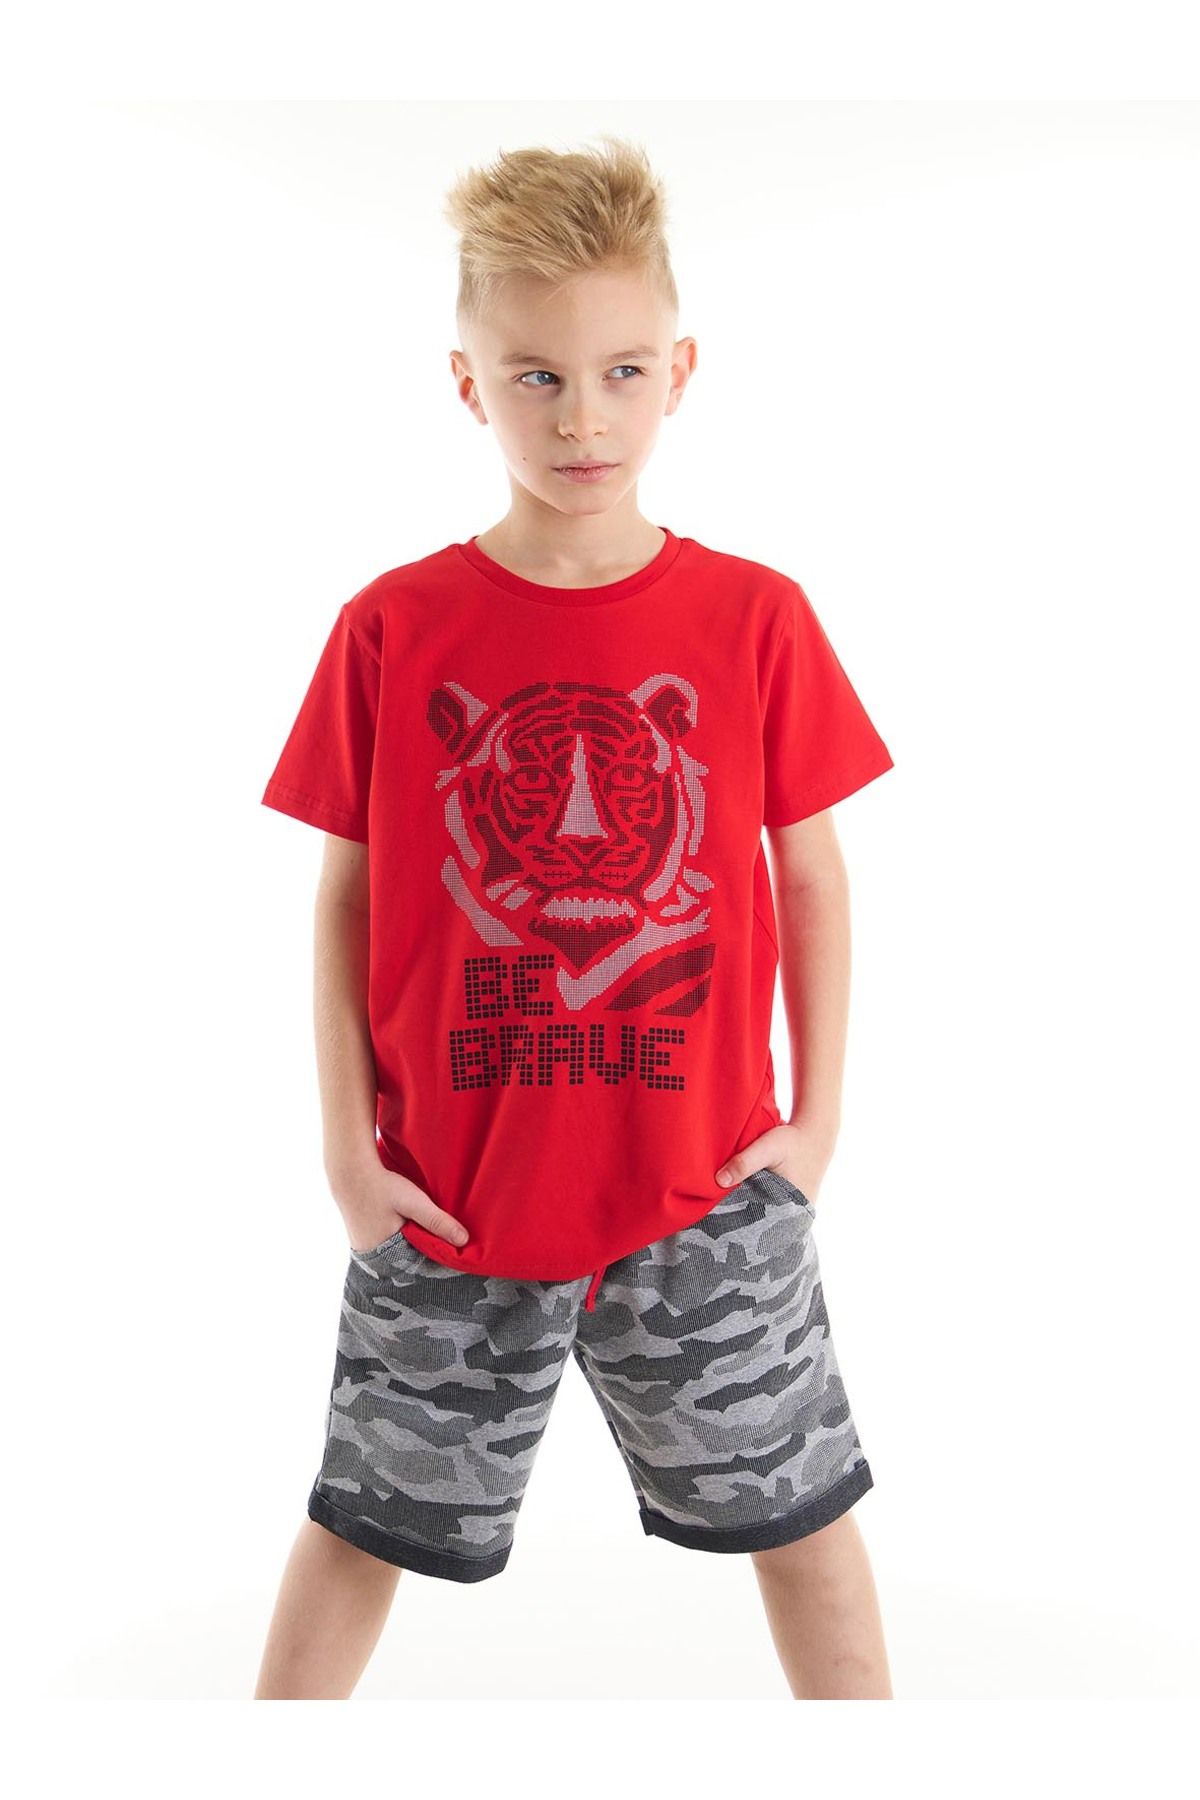 MSHB&G Cesur Kaplan Erkek Çocuk T-Shirt Şort Takım